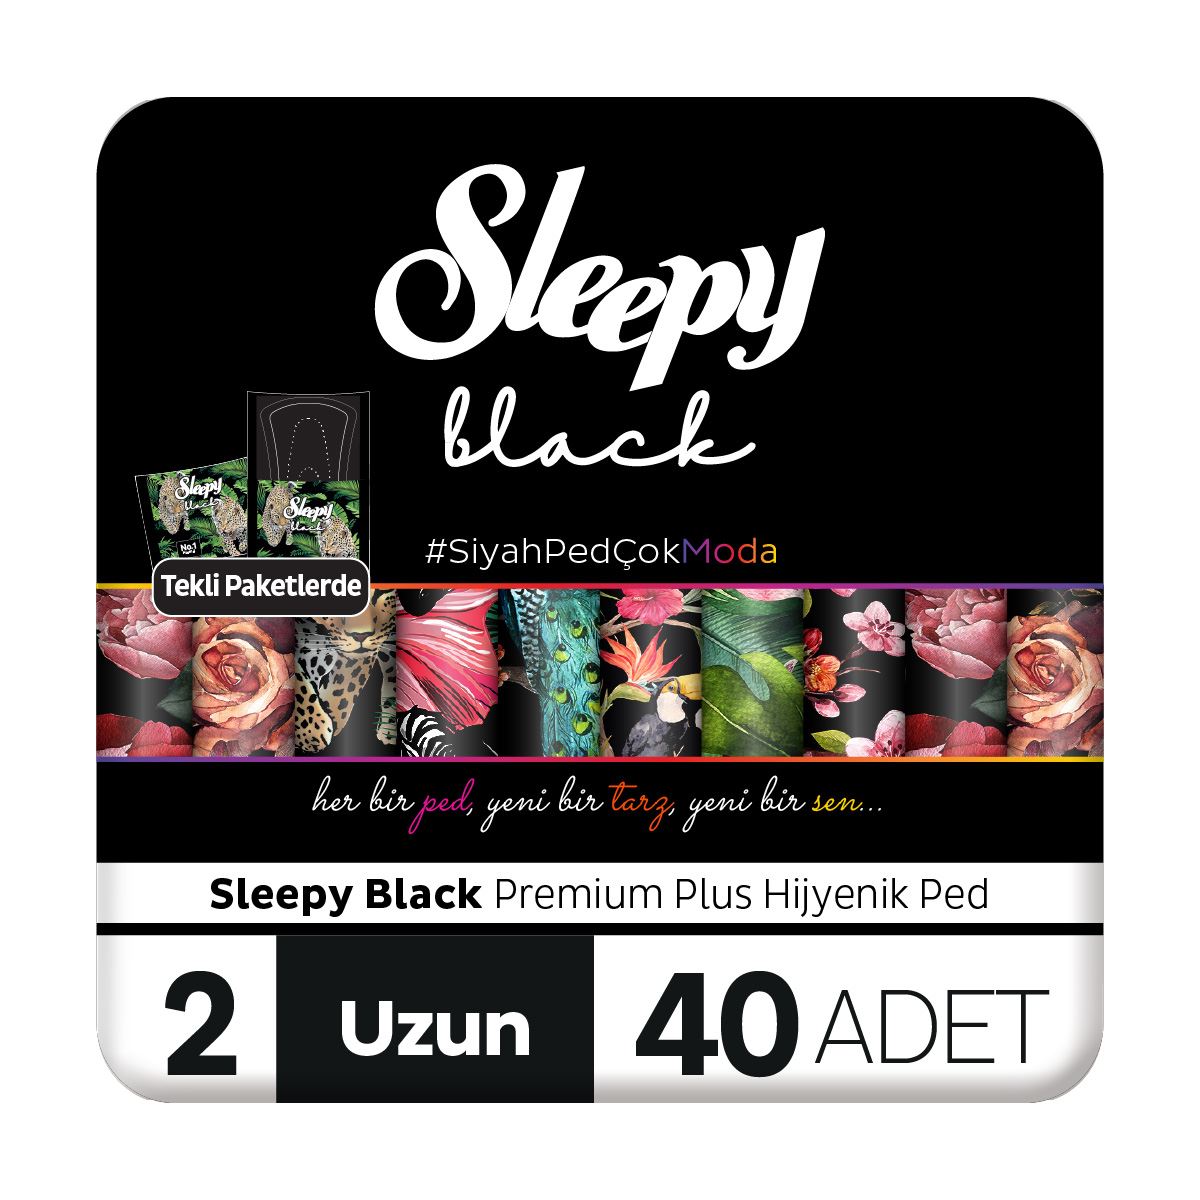 Sleepy Black Premium Plus Hijyenik Ped Uzun 40 Adet Ped